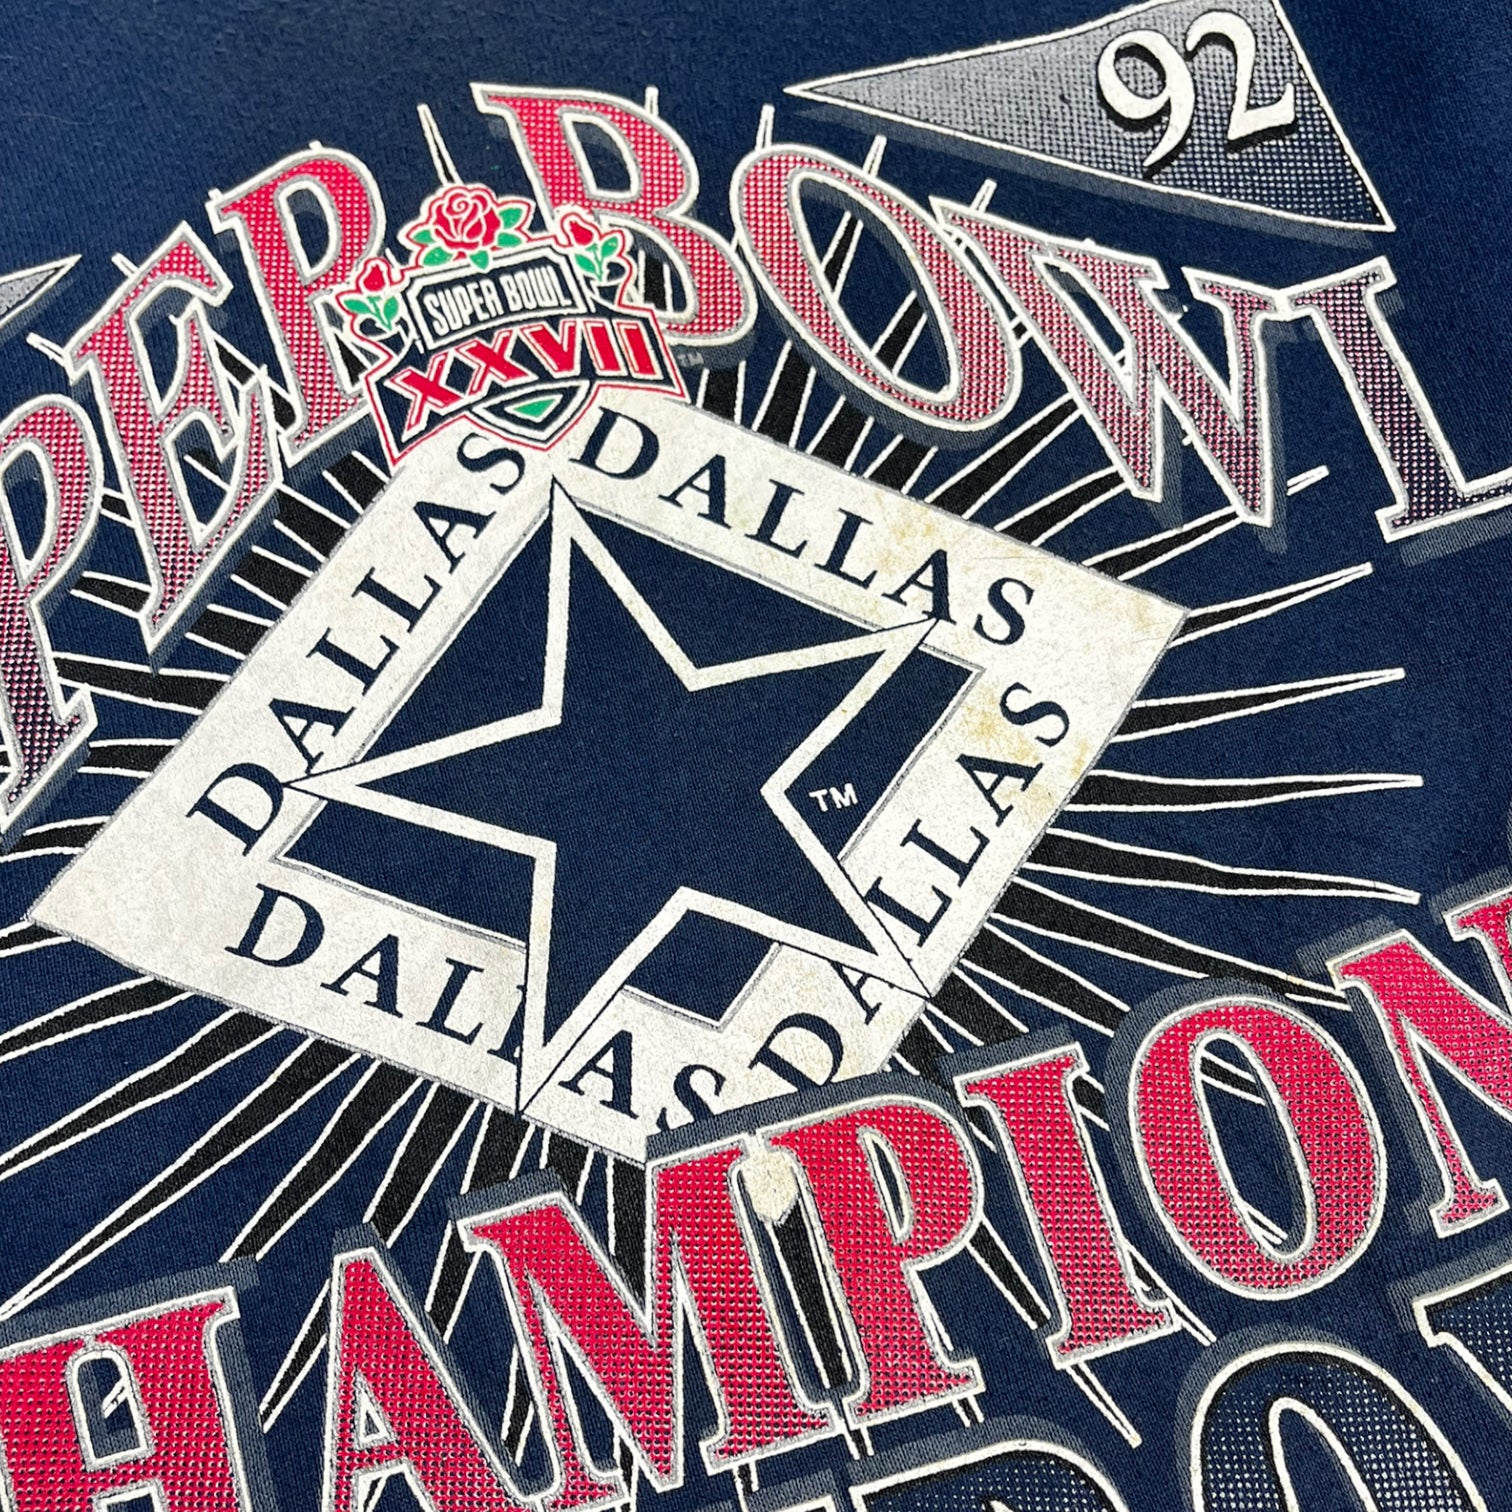 1992 Dallas Cowboys Super Bowl Champs Crew